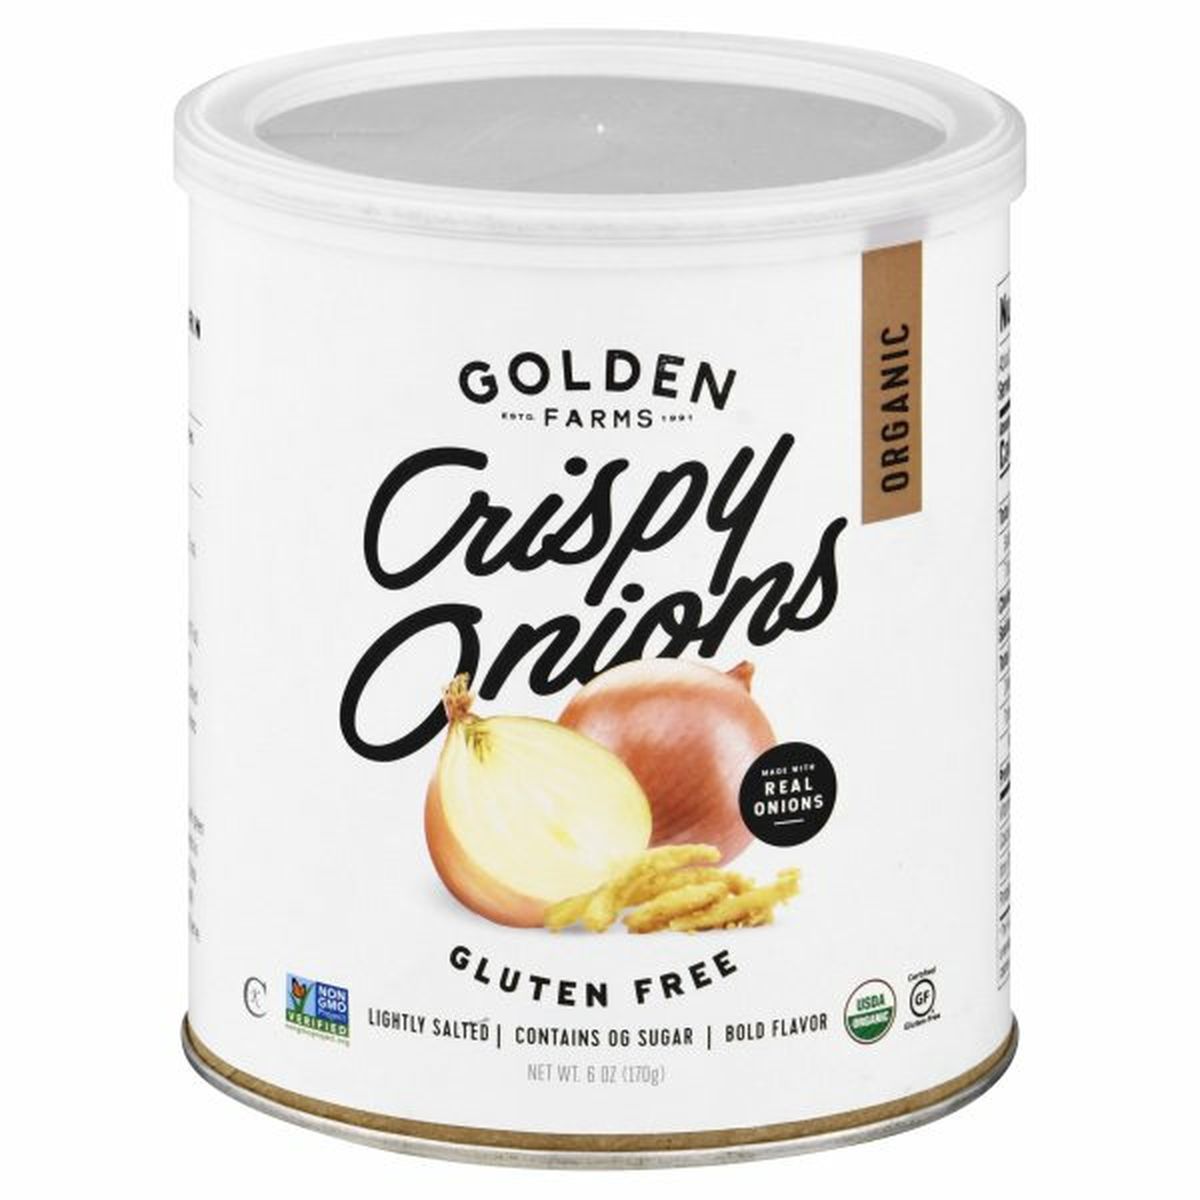 Calories in Golden Farms Organic Onions, Crispy